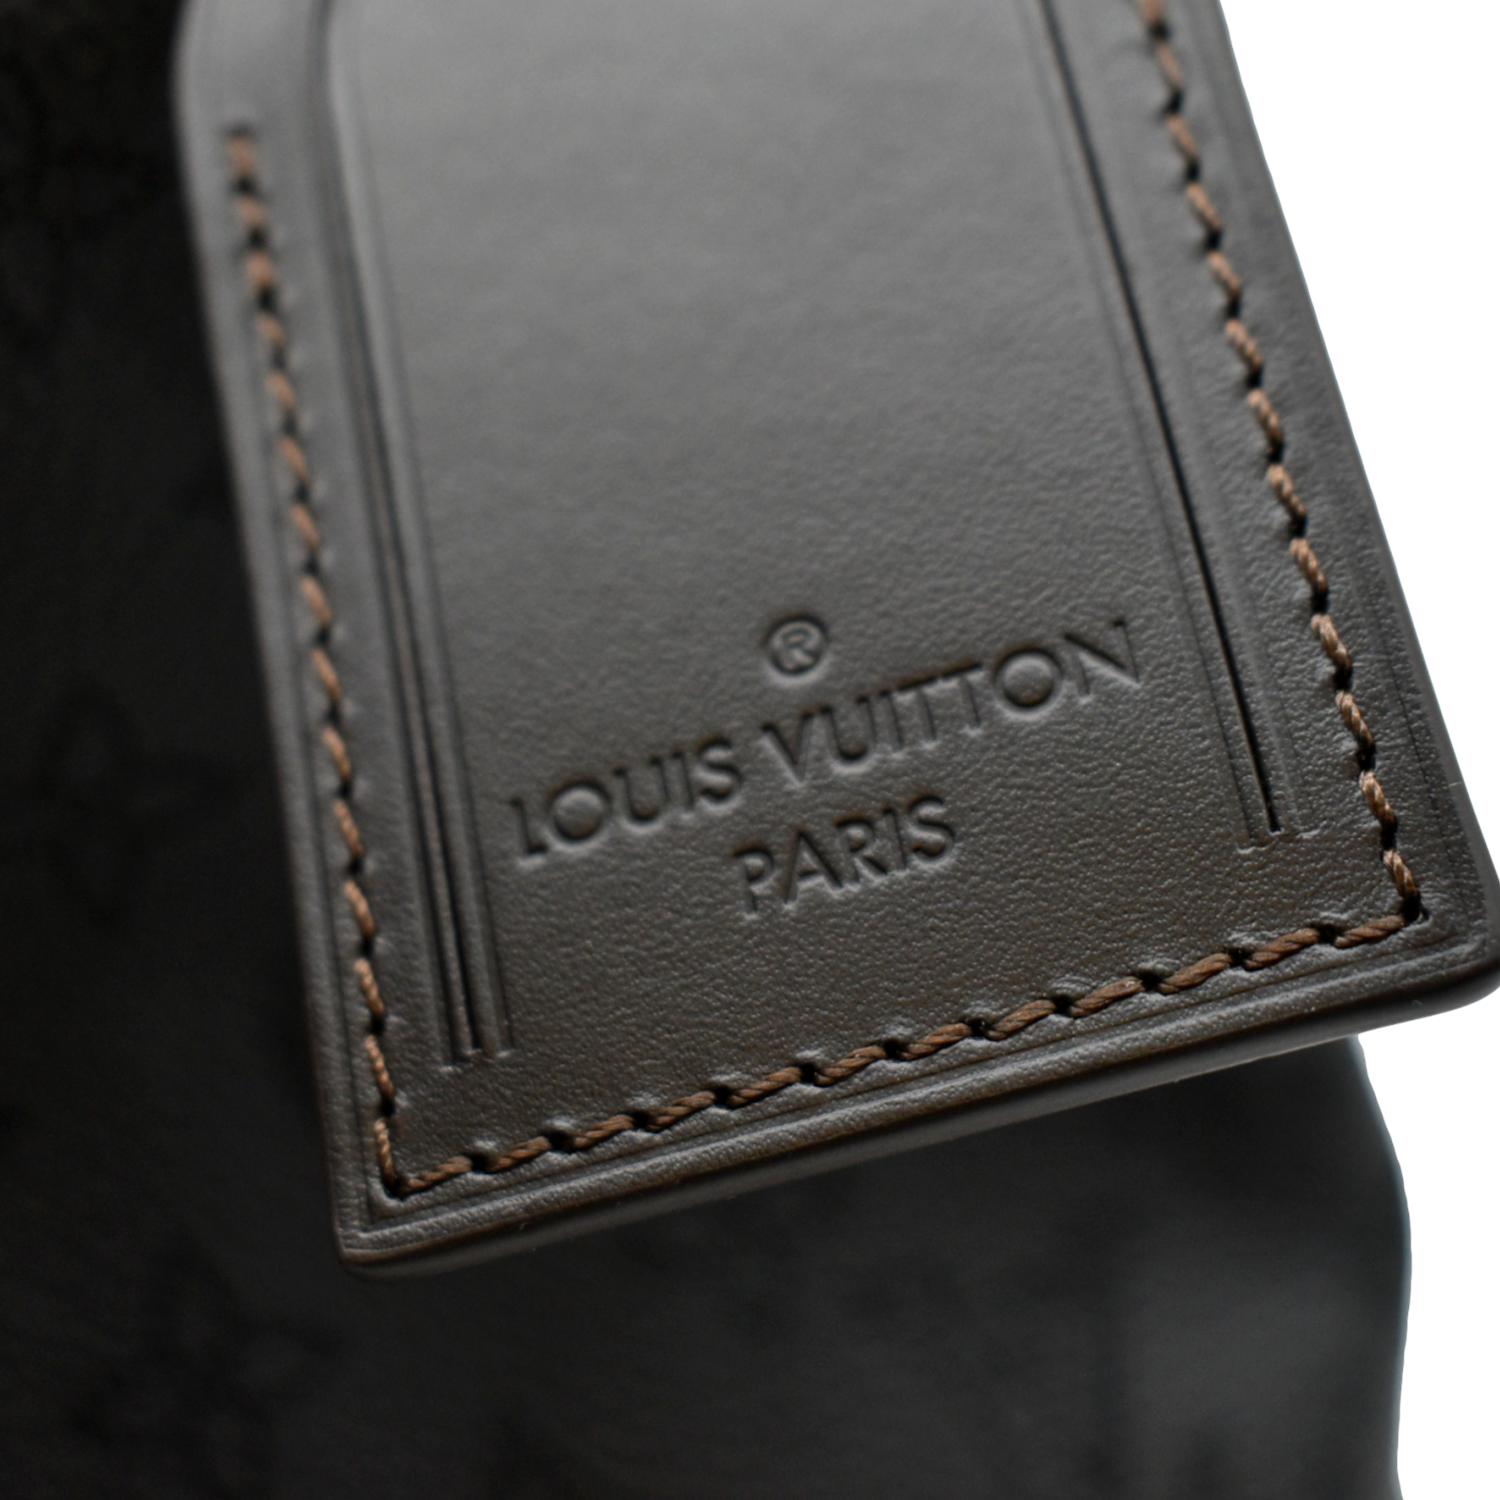 Louis Vuitton Mahina Beaubourg Hobo MM M56073-black